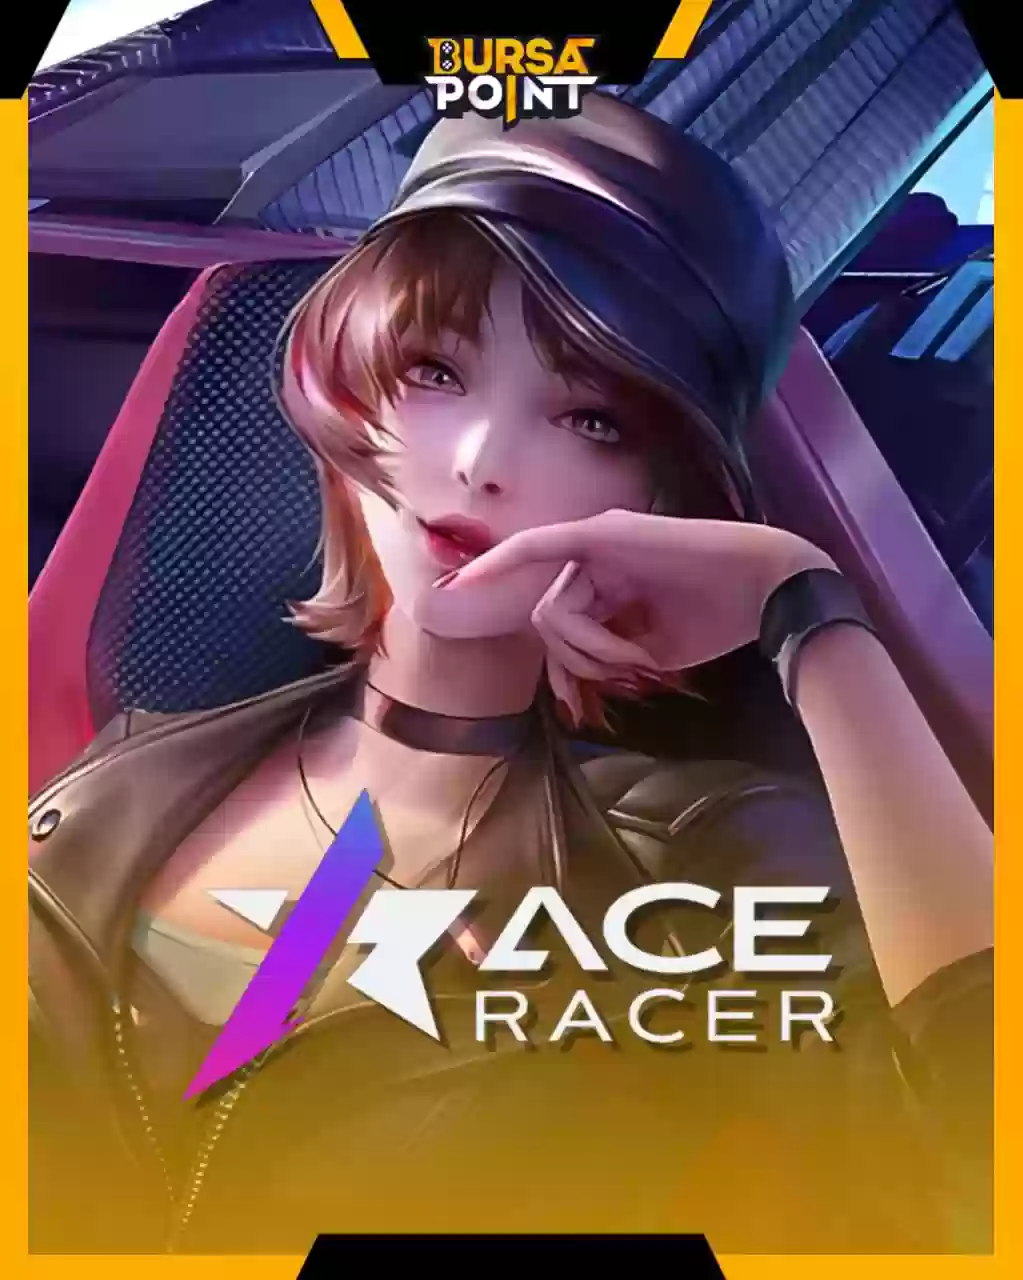 Ace Racer Murah